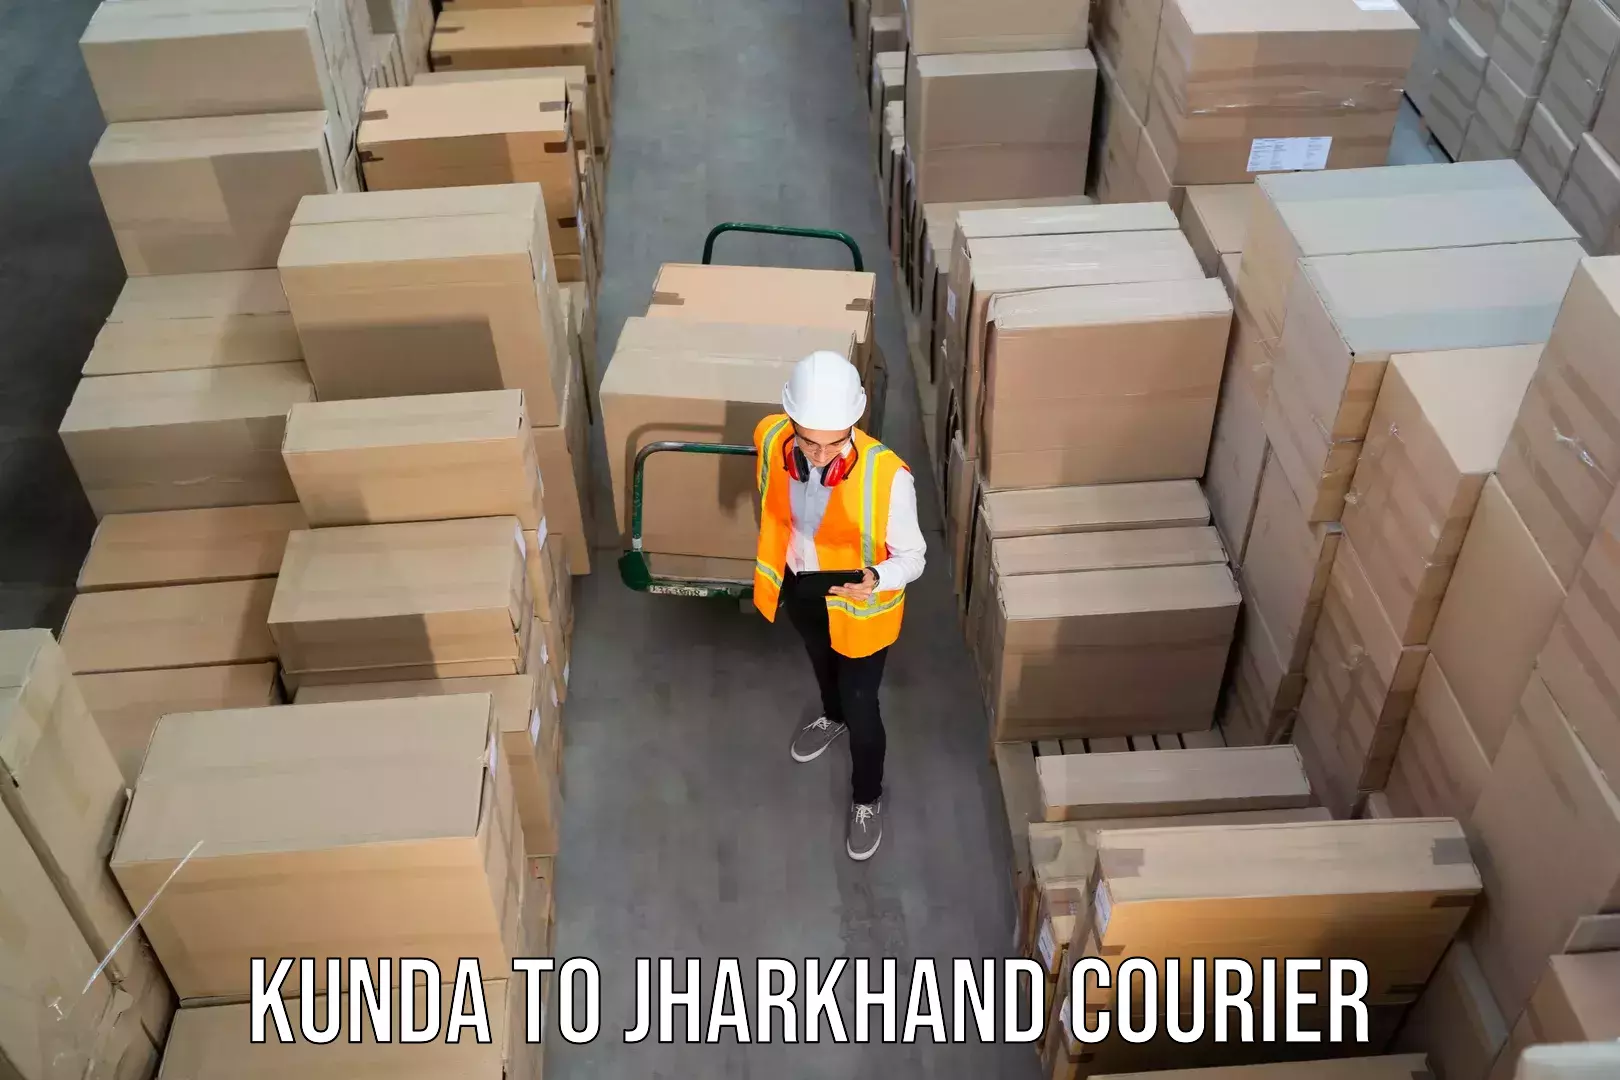 Affordable parcel service Kunda to Peterbar